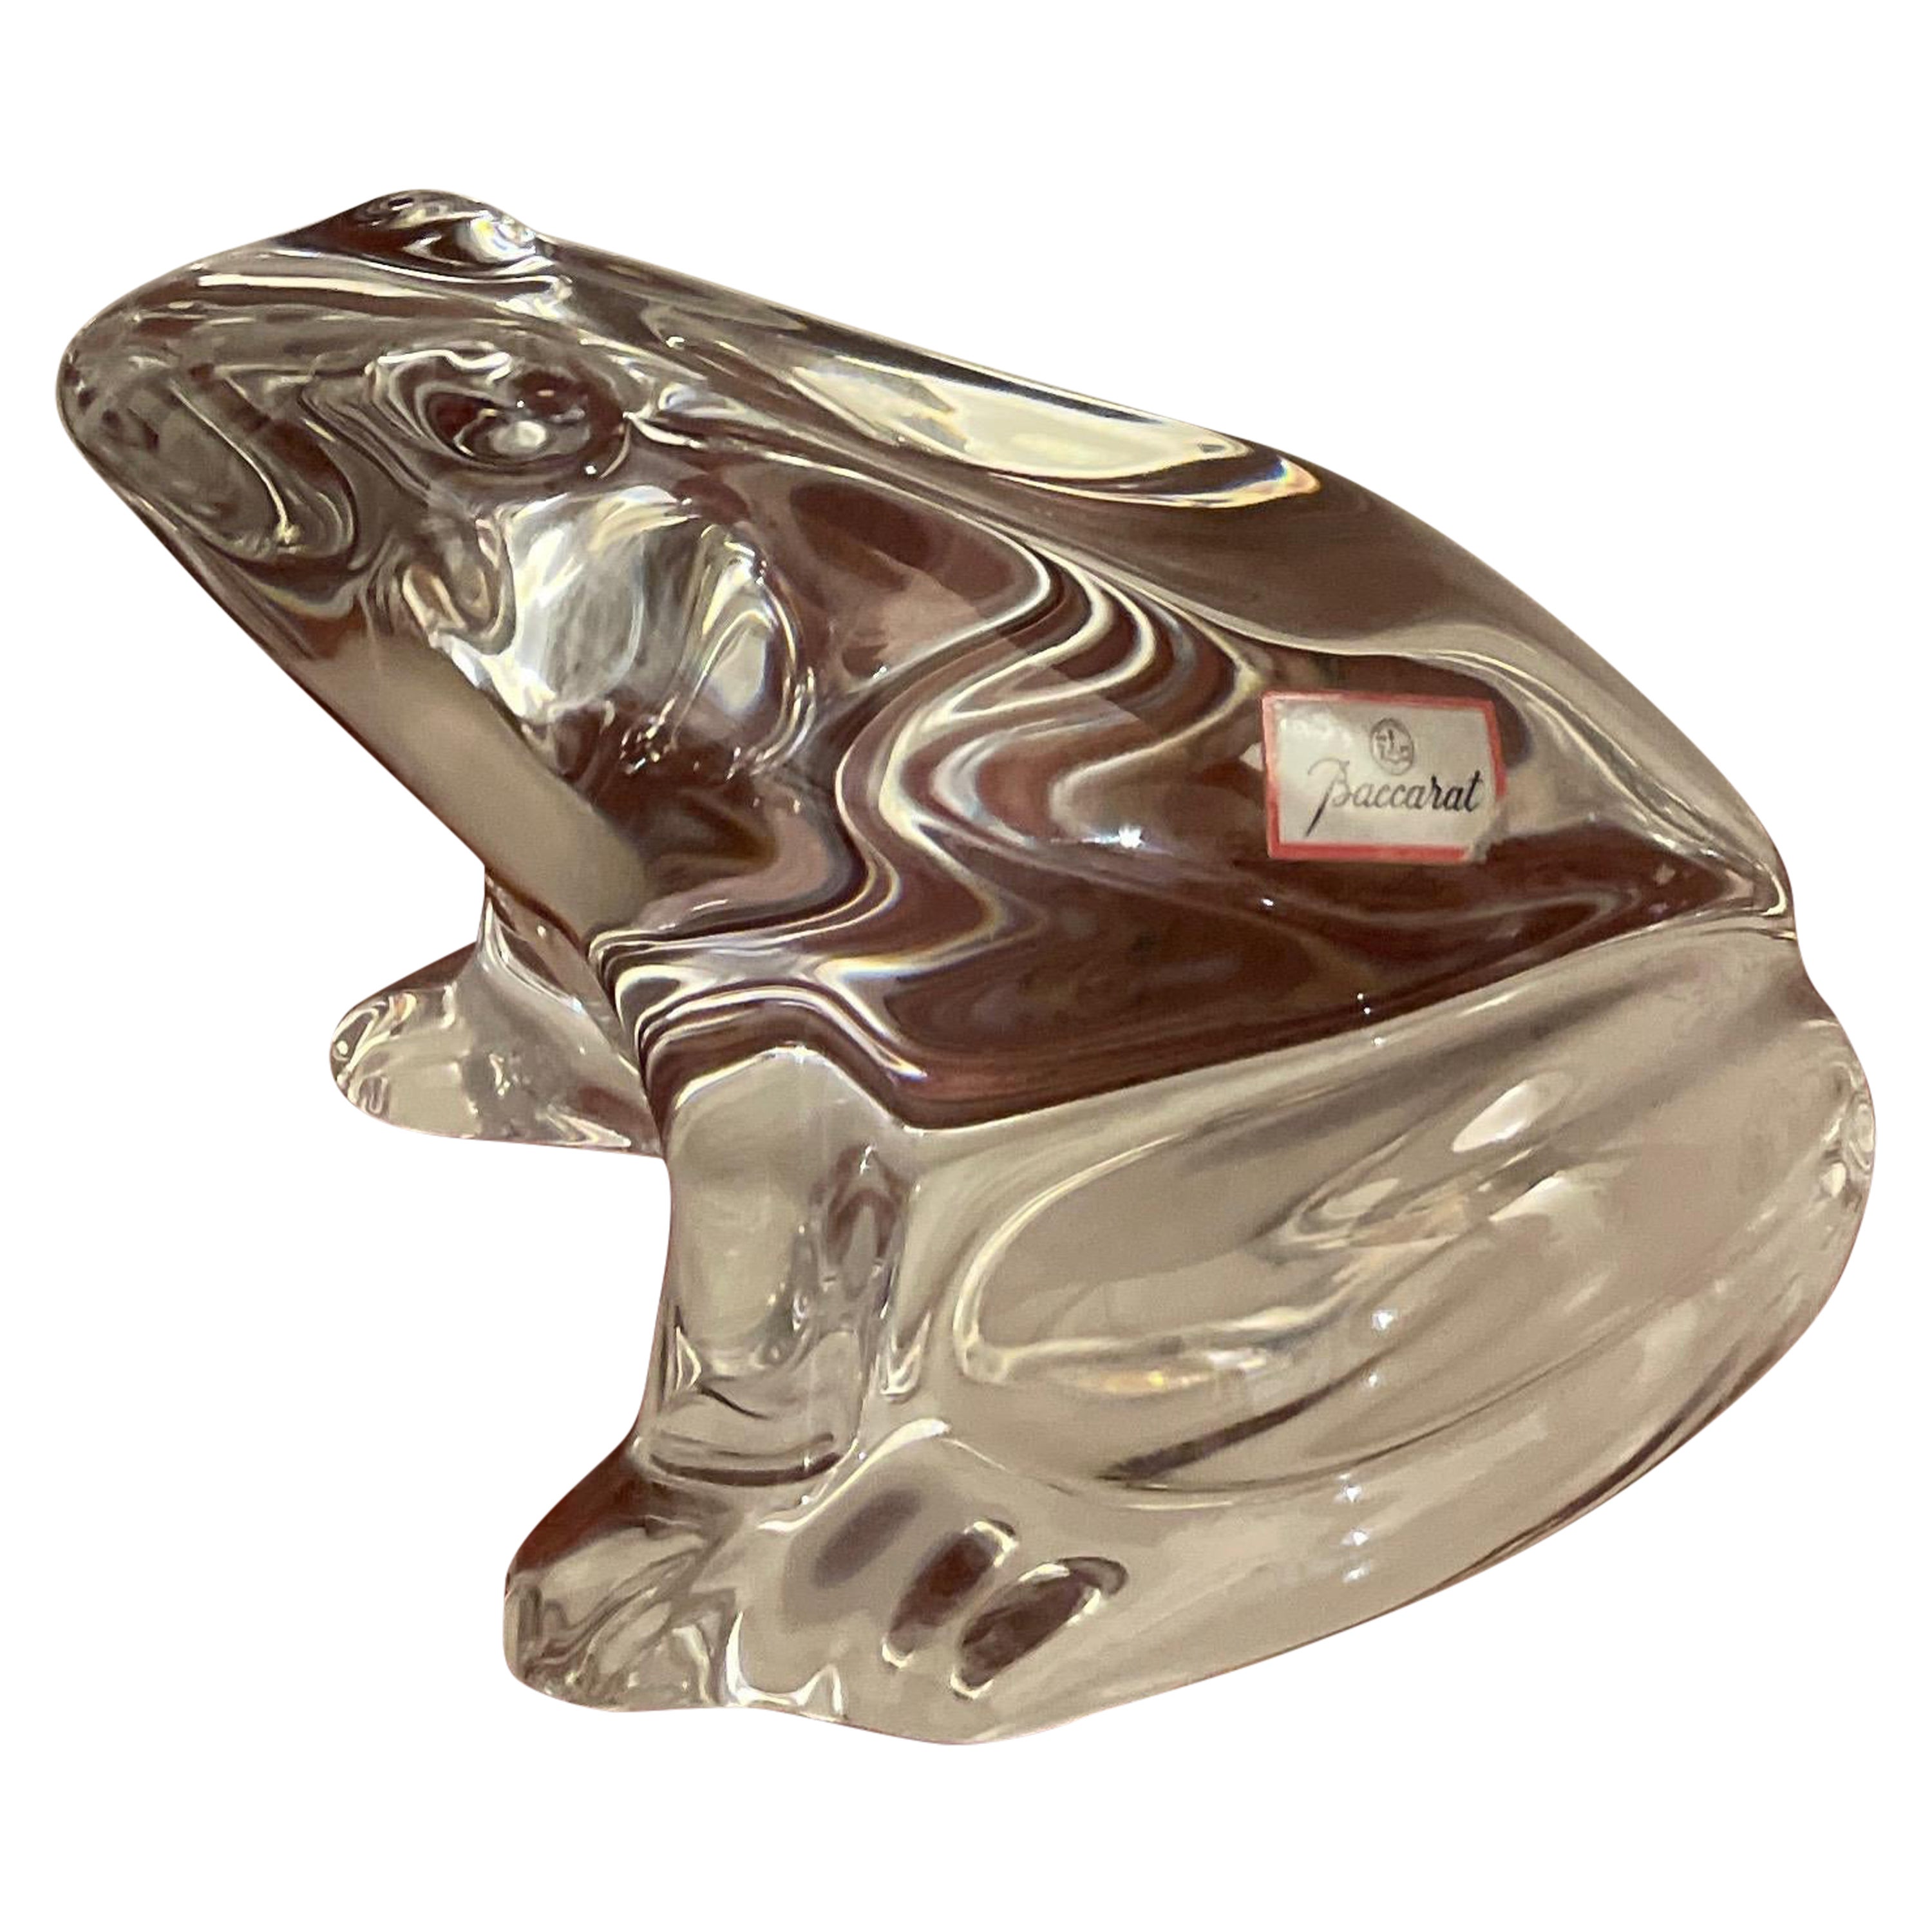 Figurine de grenouille en cristal de Baccarat